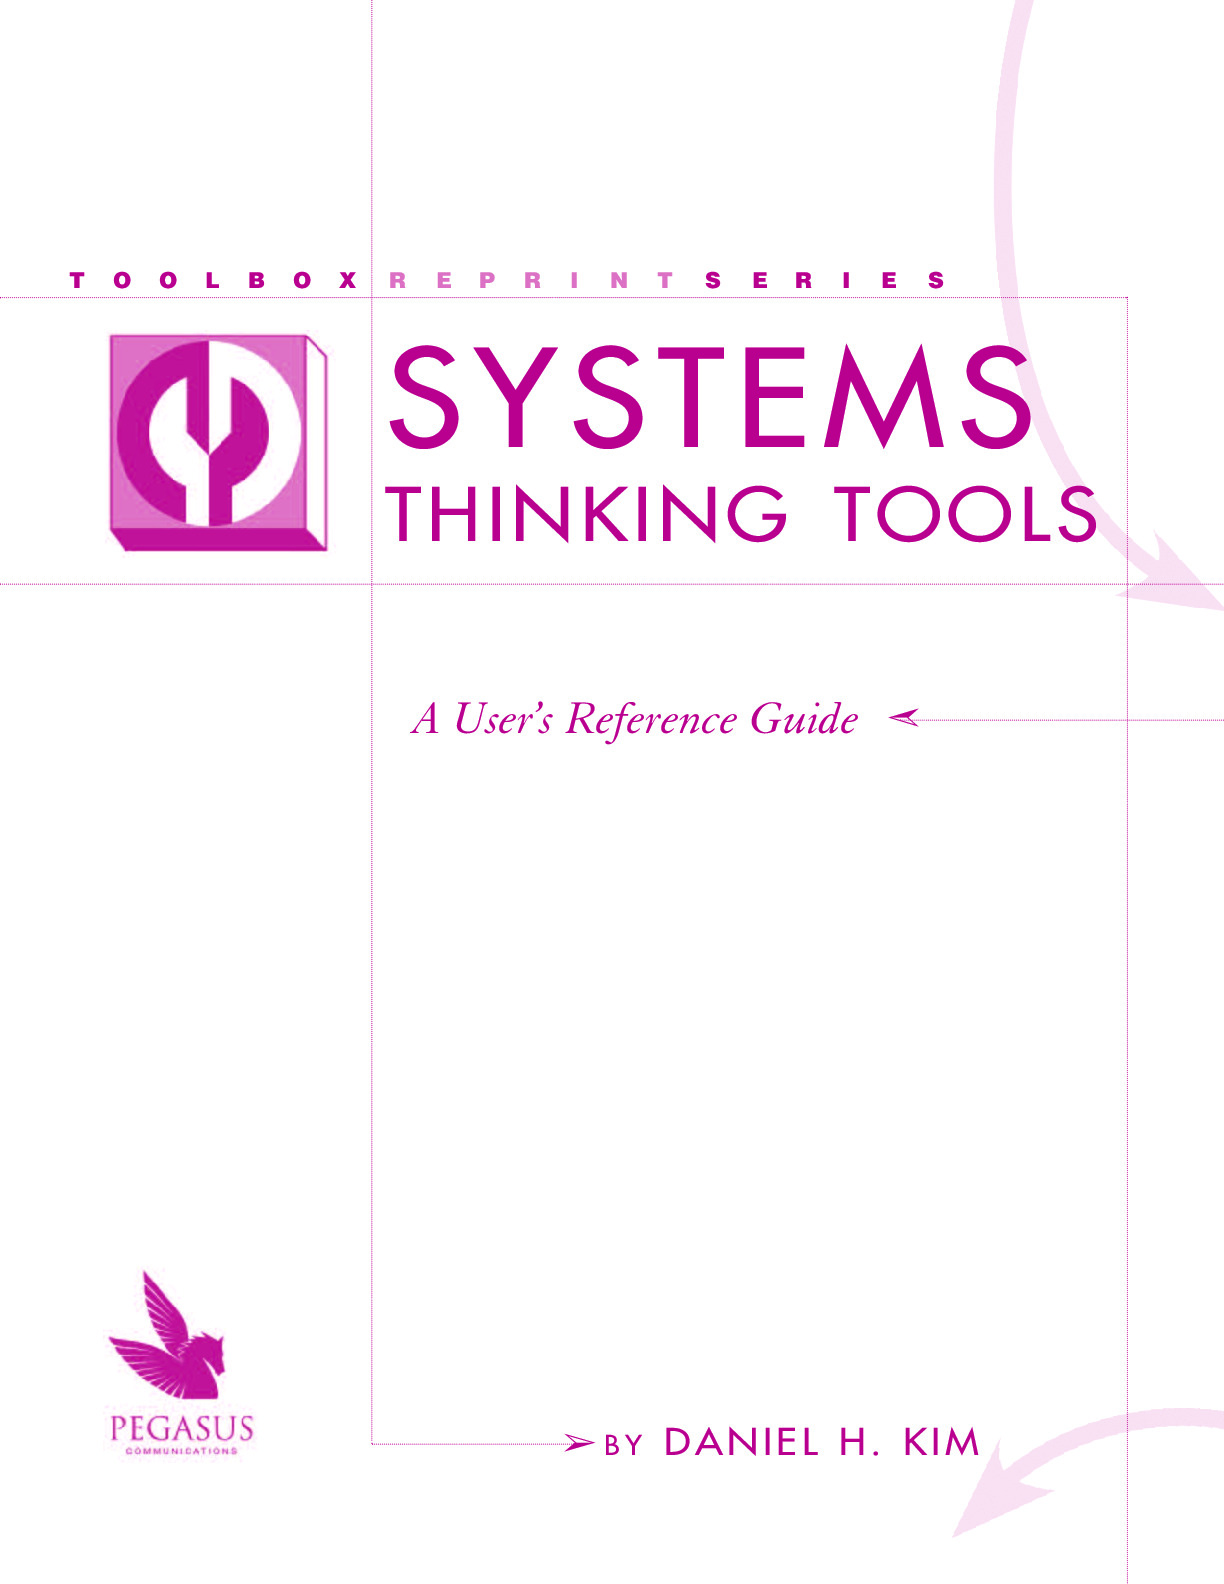 Kim (2000) – Systems Thinking Tools